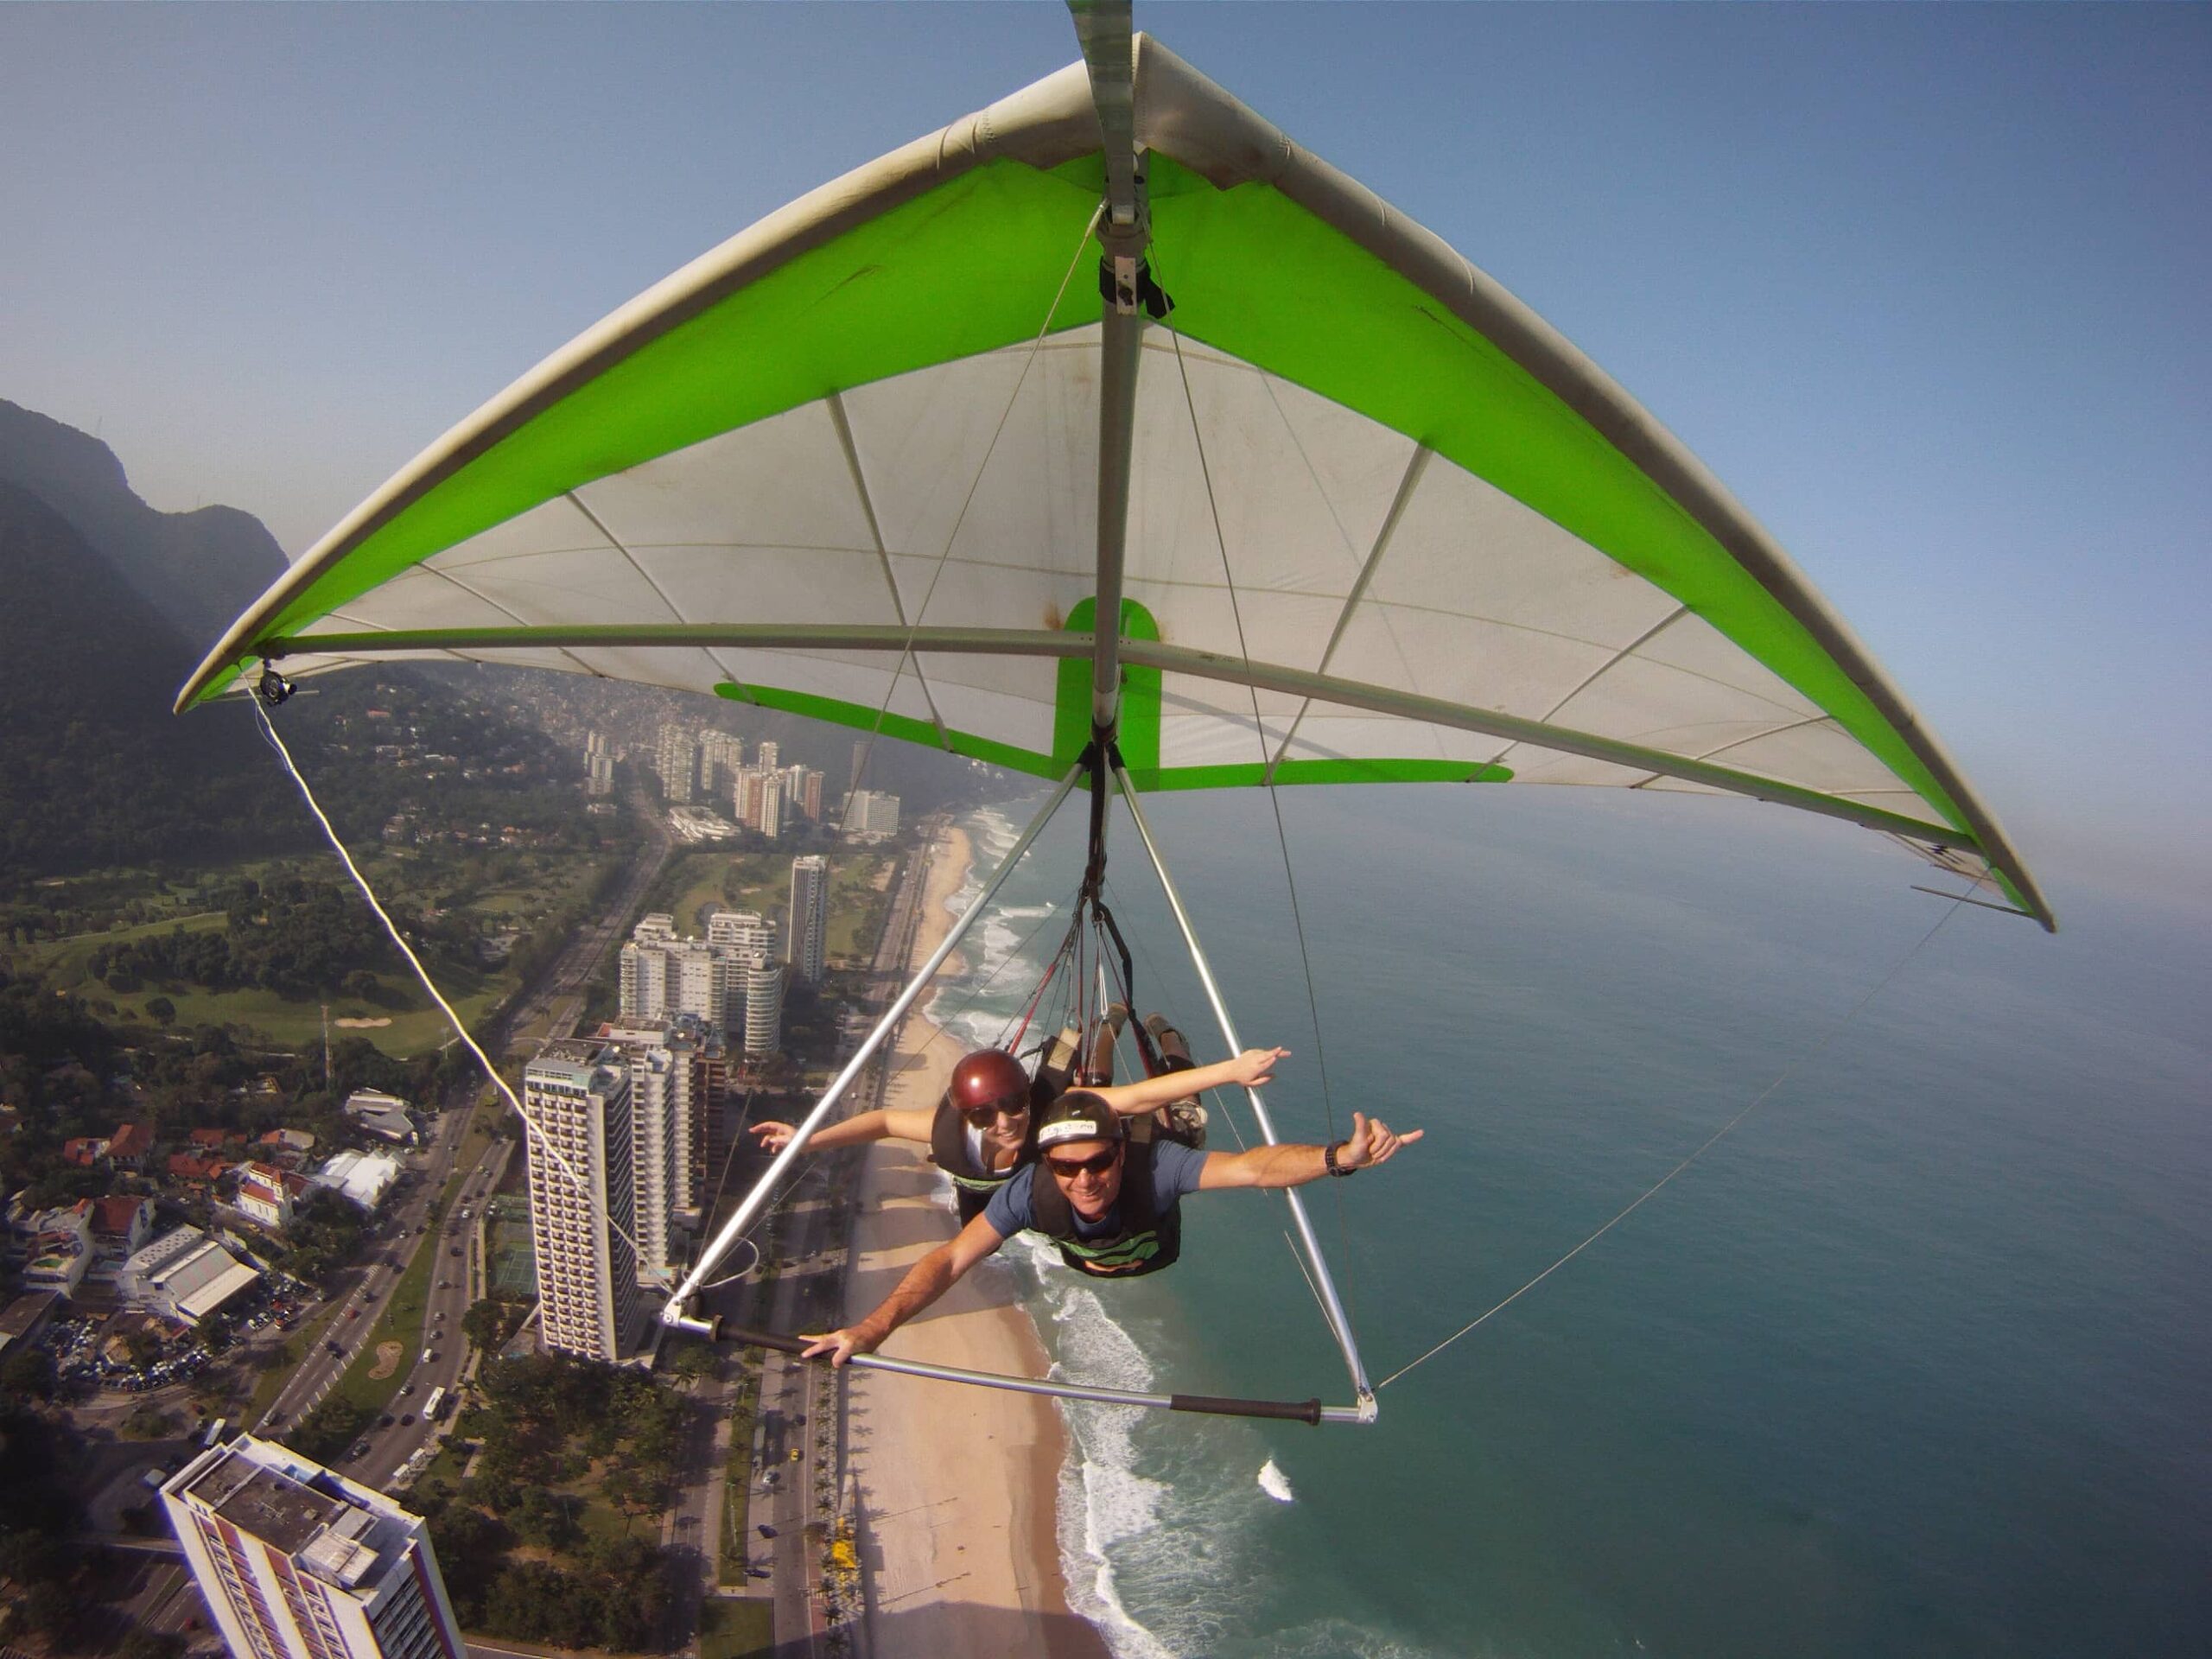 Rio_Hang_Gliding_over_the_beach-scaled.jpg